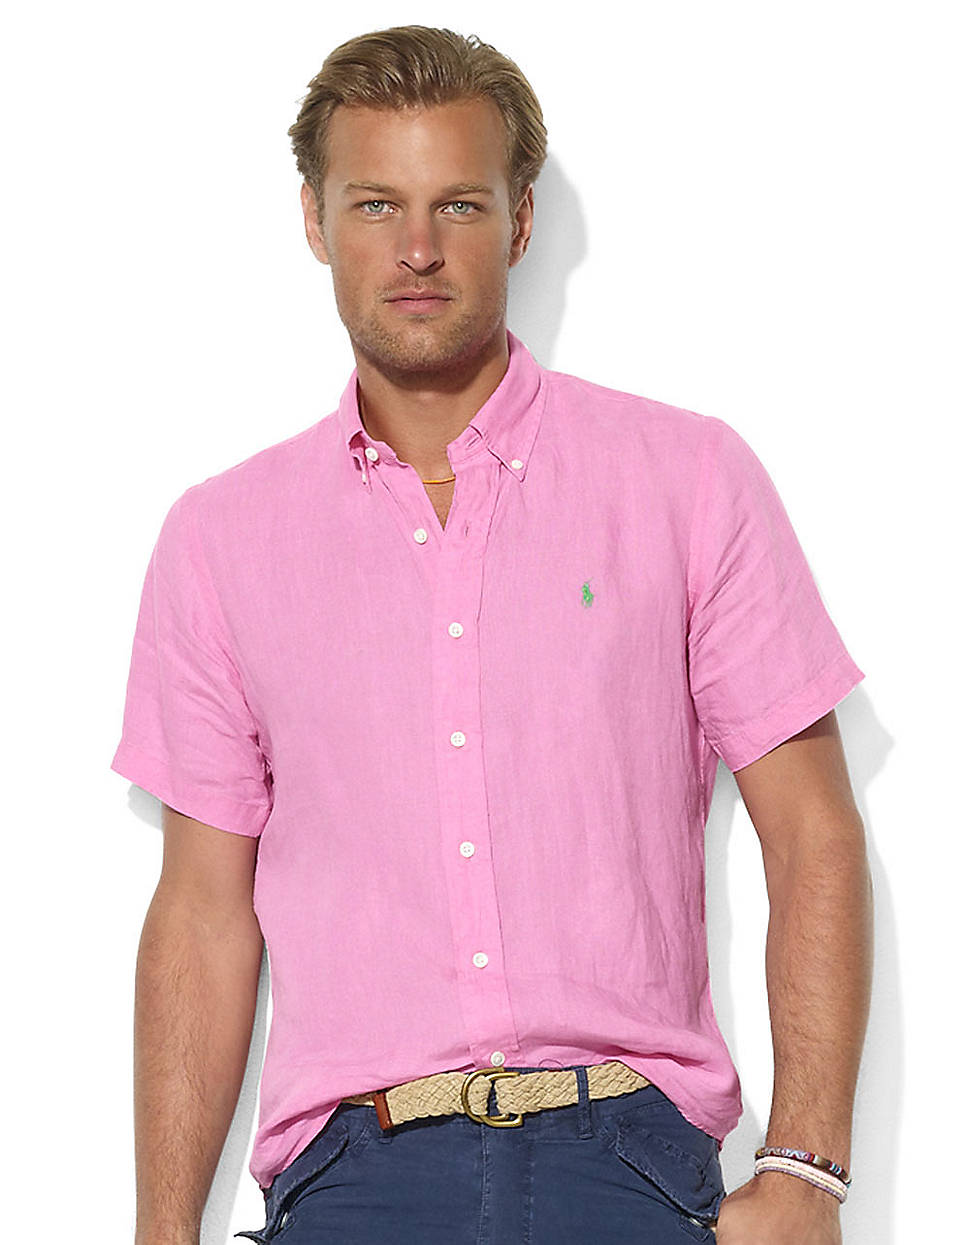 Lyst - Polo Ralph Lauren Customfit Shortsleeved Linen Shirt in Pink for Men